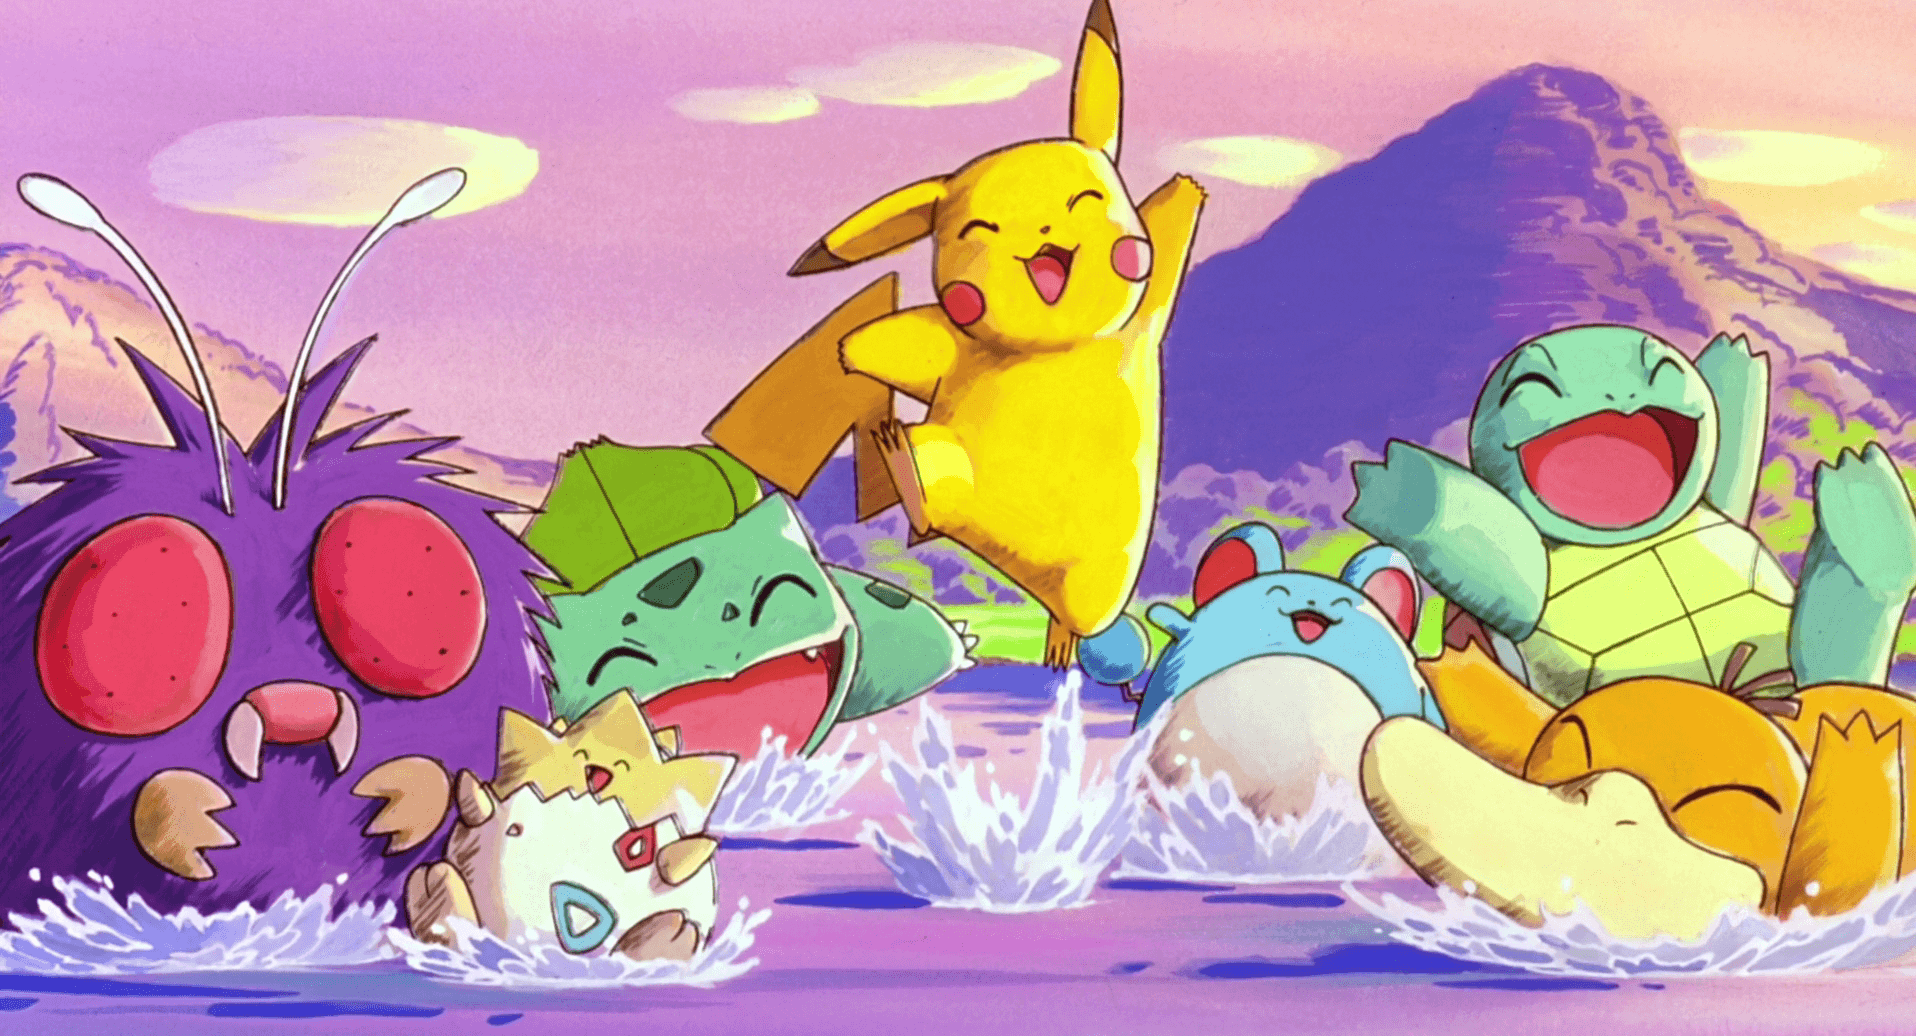 Togepi (Pokémon) HD Wallpaper and Background Image